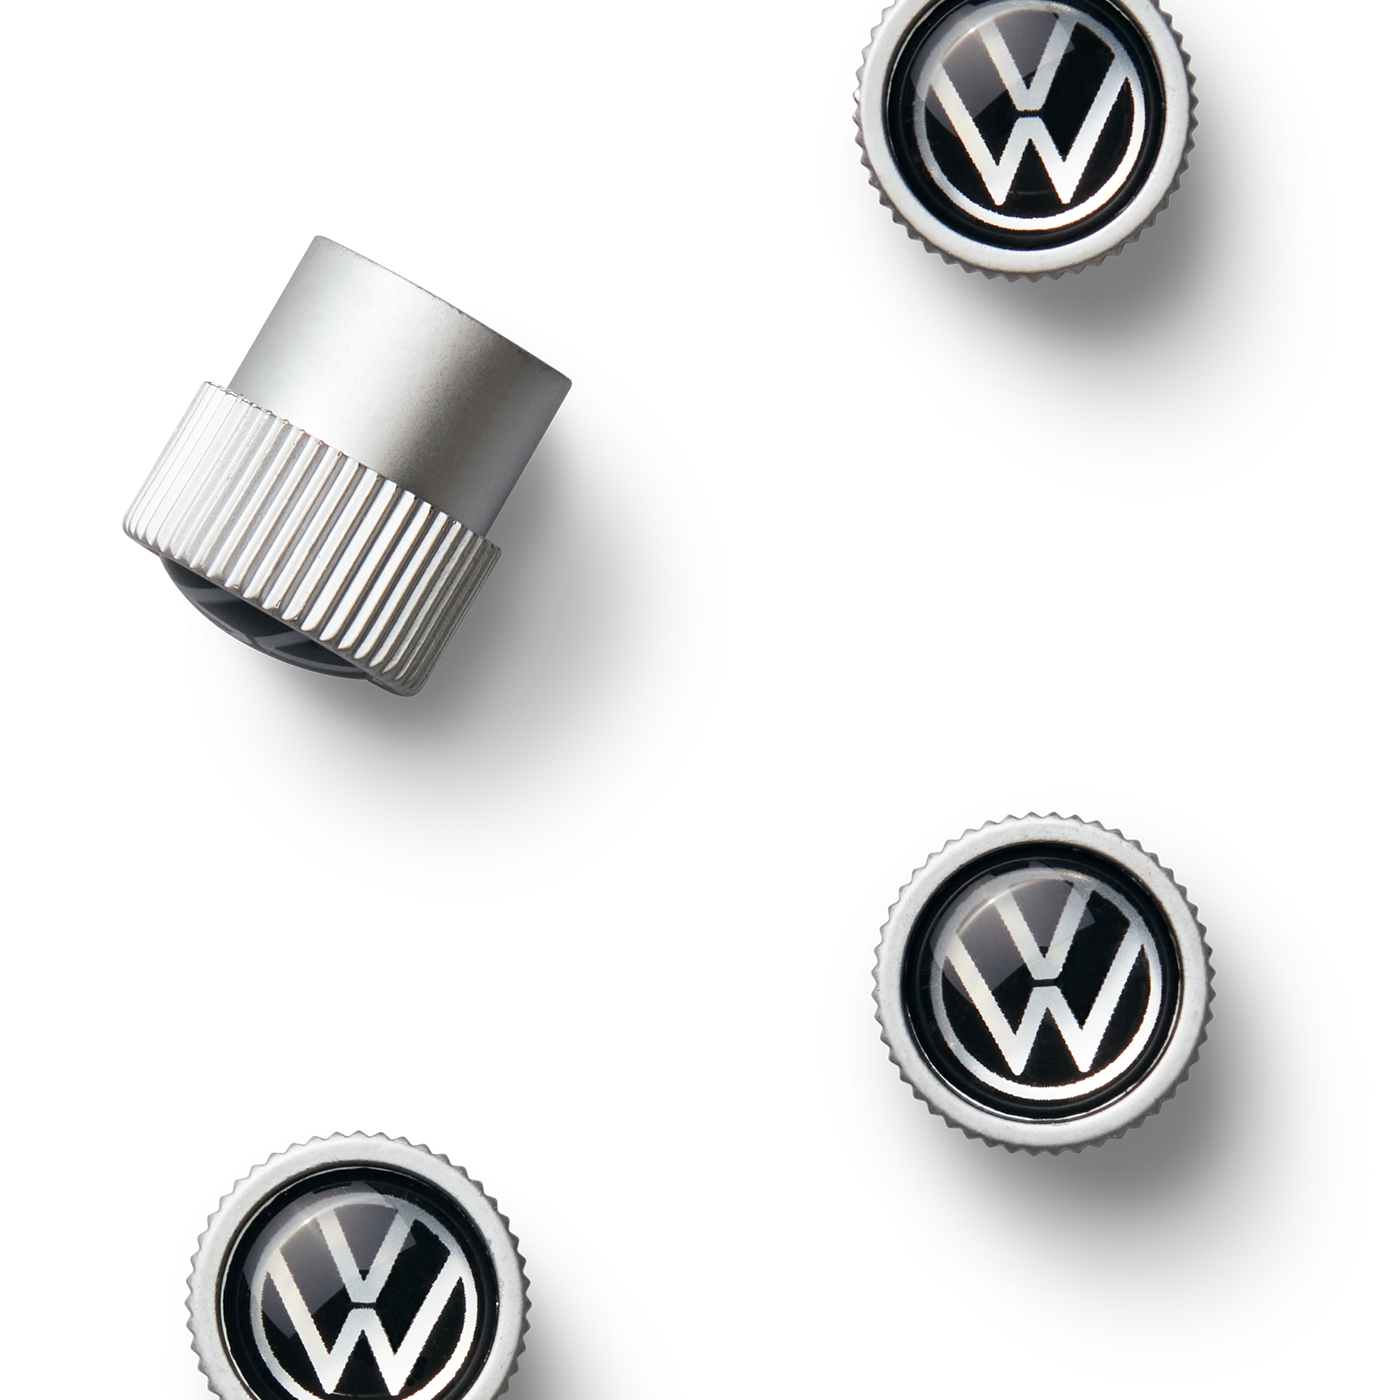 Geme 4pcs Valve Cap Volkswagen GTI Logo Fit for Volkswagen Polo Scirocco Tiguan Touareg Touran 